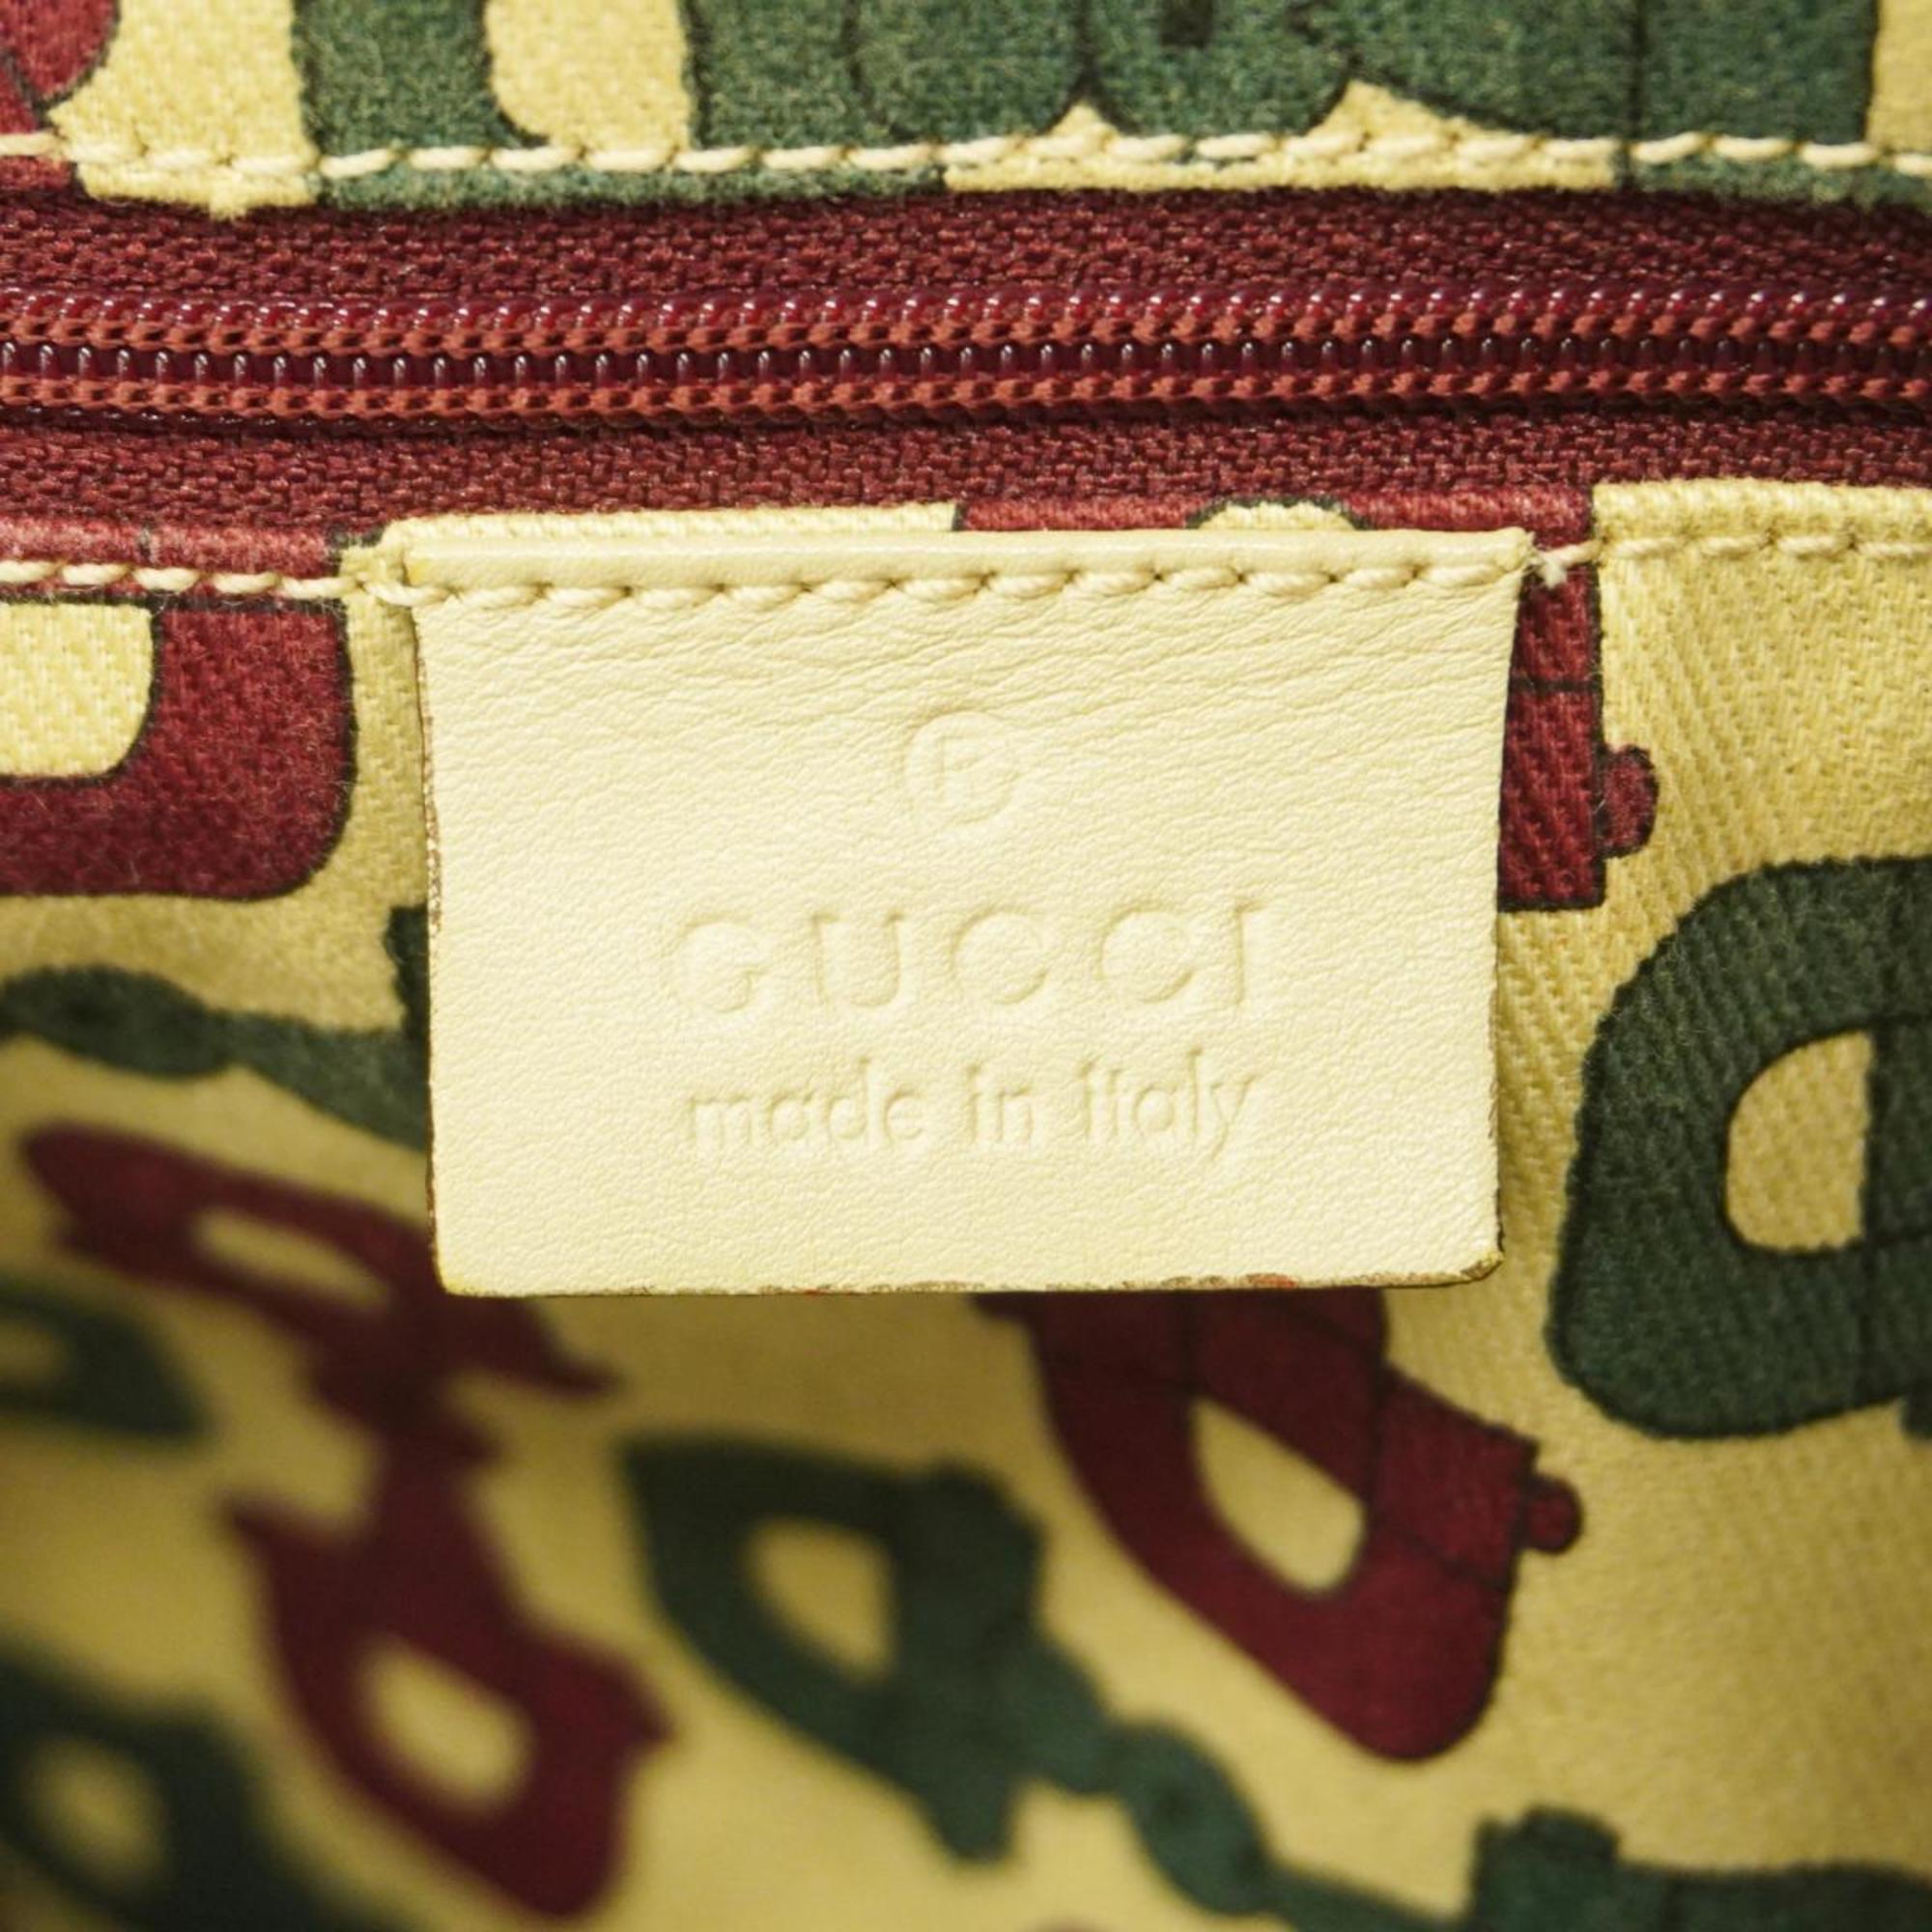 Gucci Tote Bag Guccissima 130736 Leather Ivory Champagne Women's